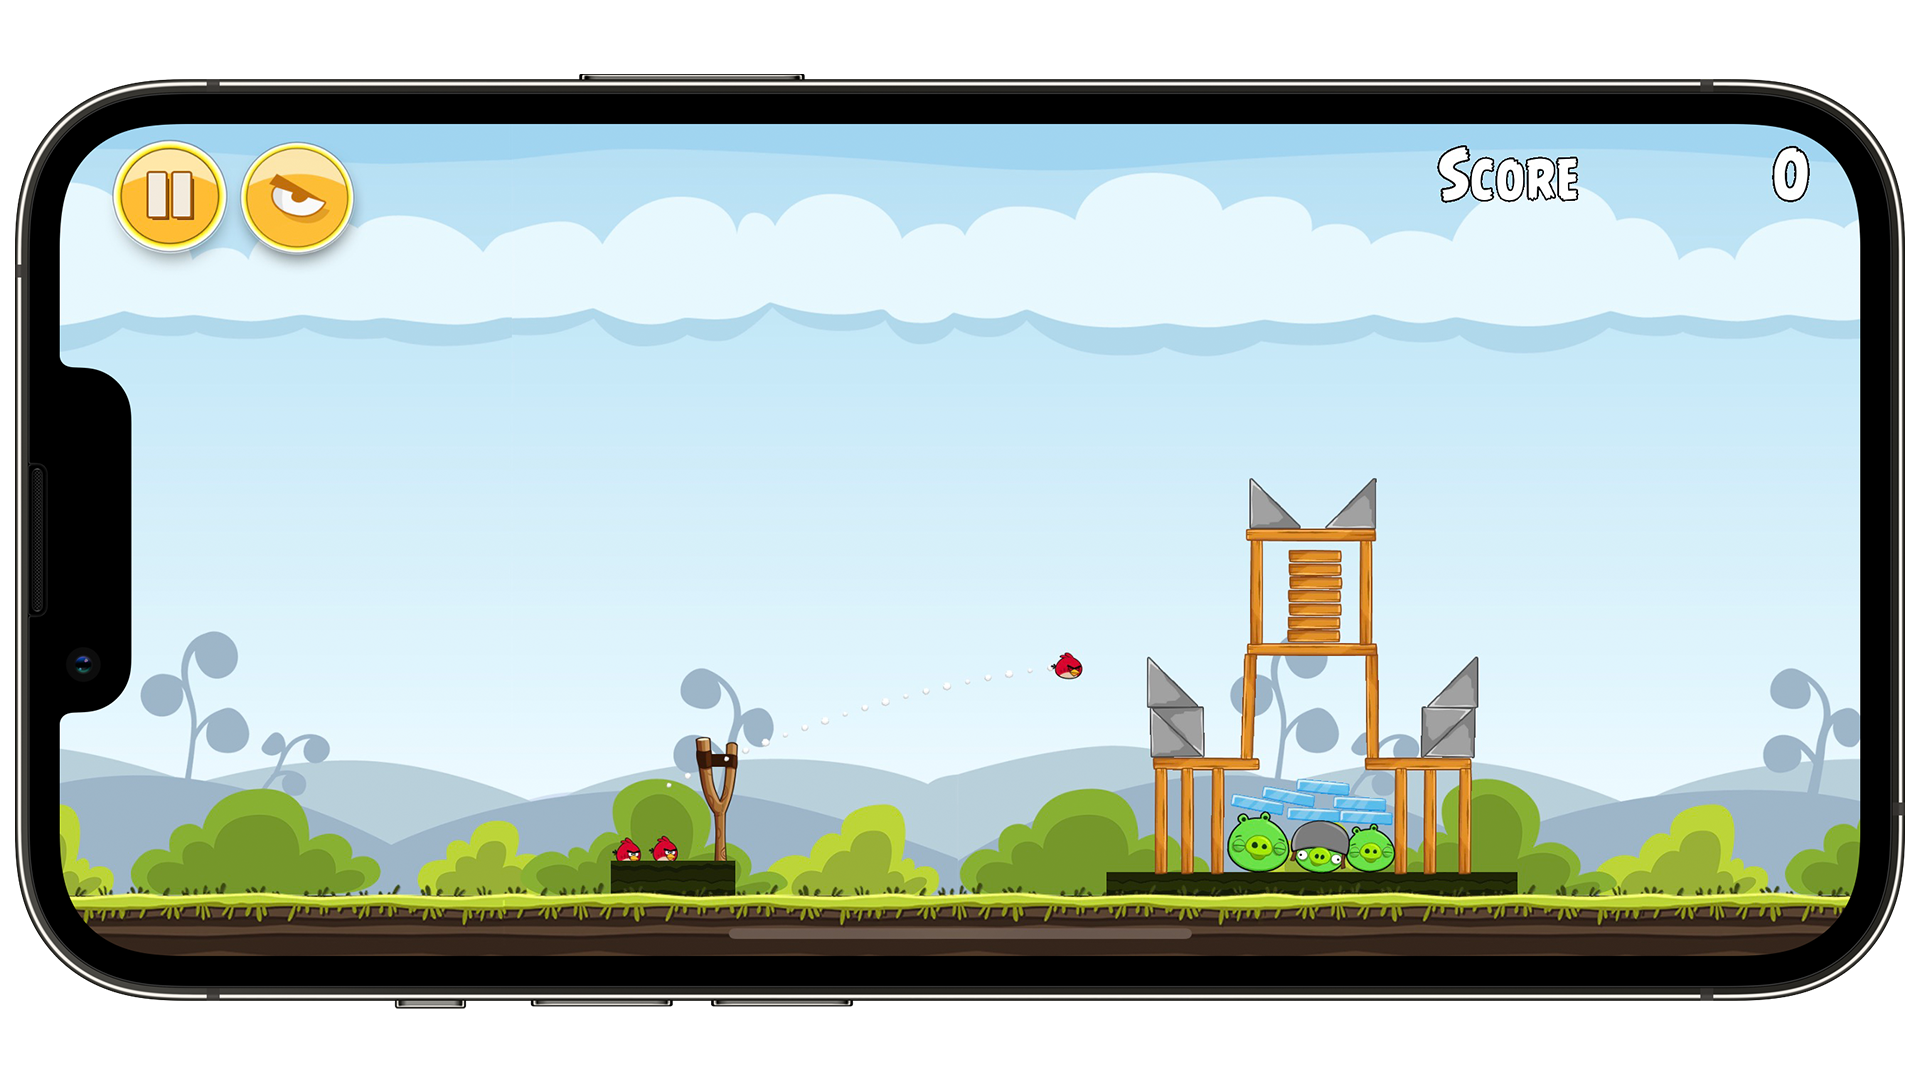 Angry Birds Classic on iOS 15